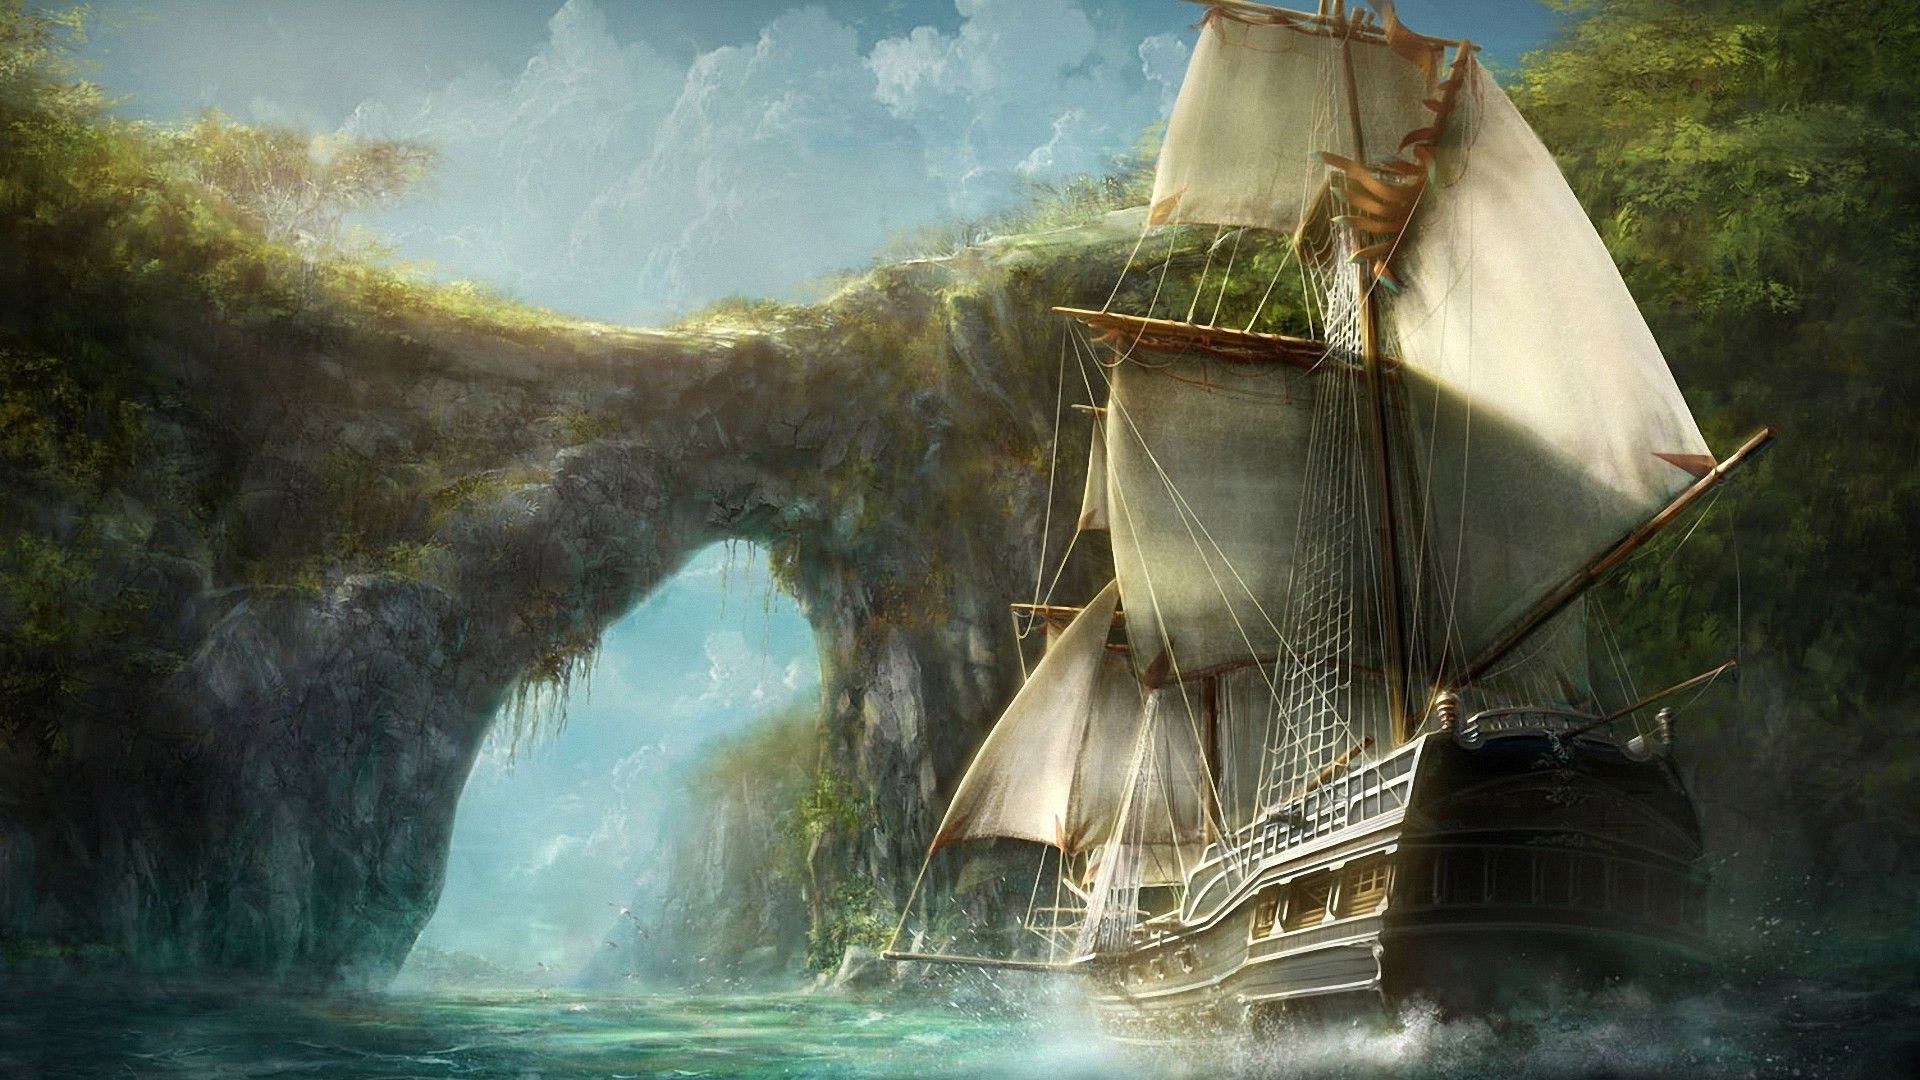 General 1920x1080 old ship ship rocks water bay pirates Caribbean digital art vehicle fantasy art rigging (ship) sailing ship